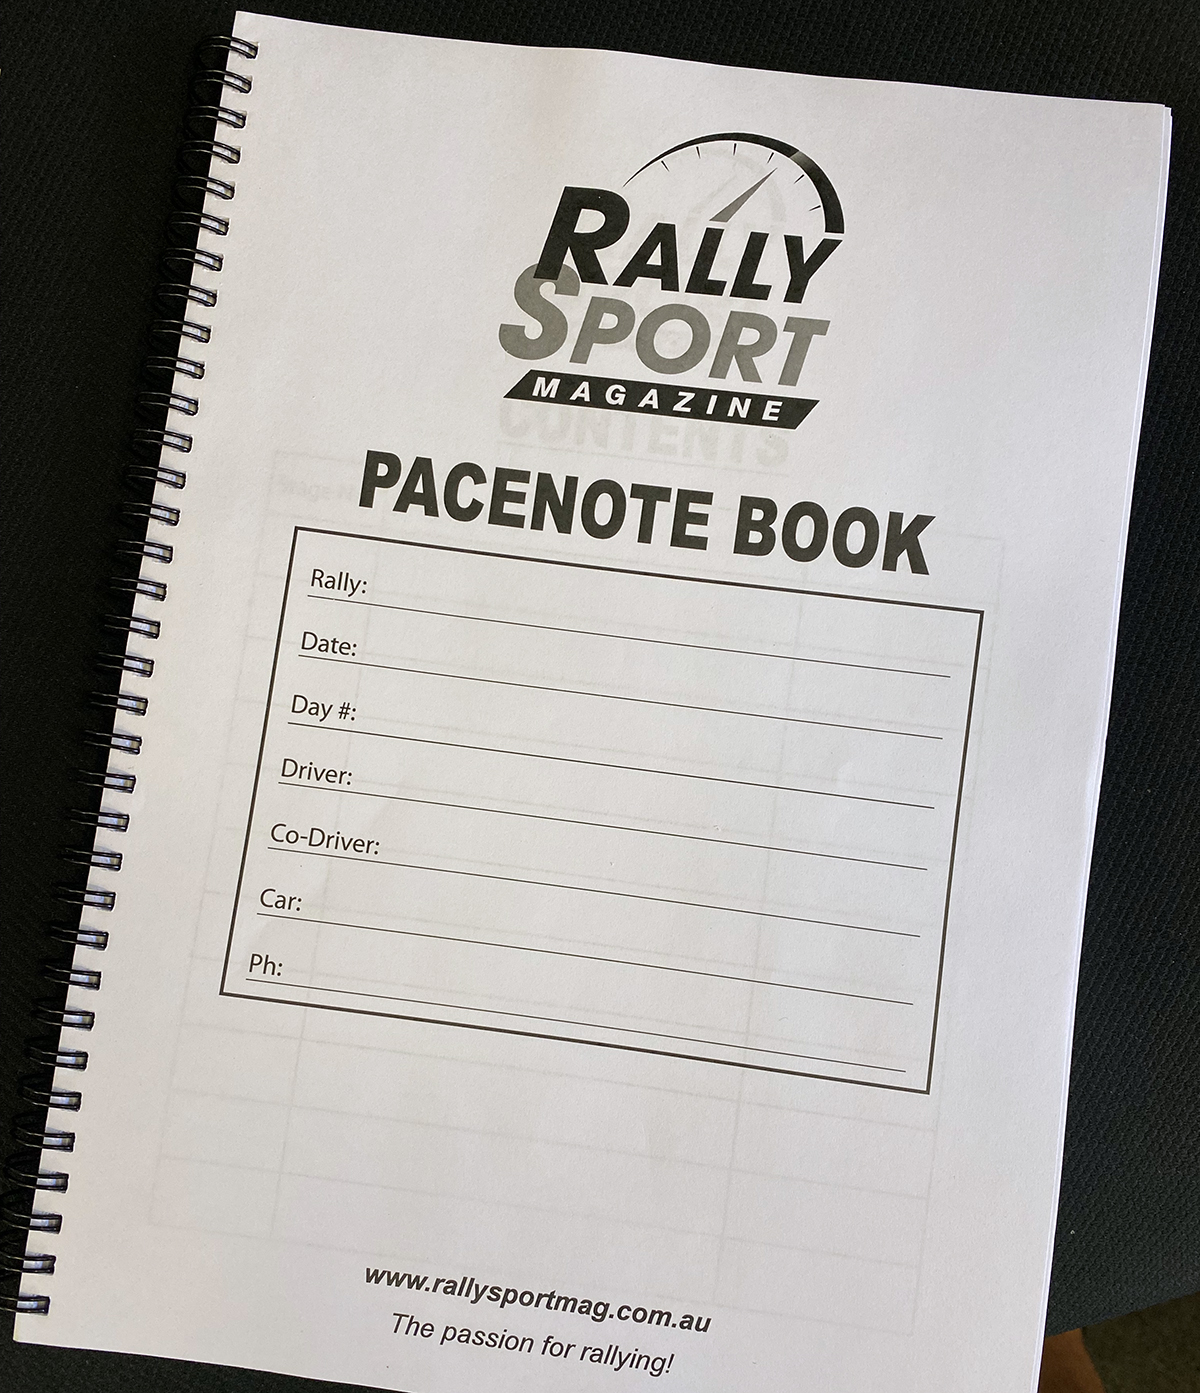 Cahier de note BPS Rallye NoteBook